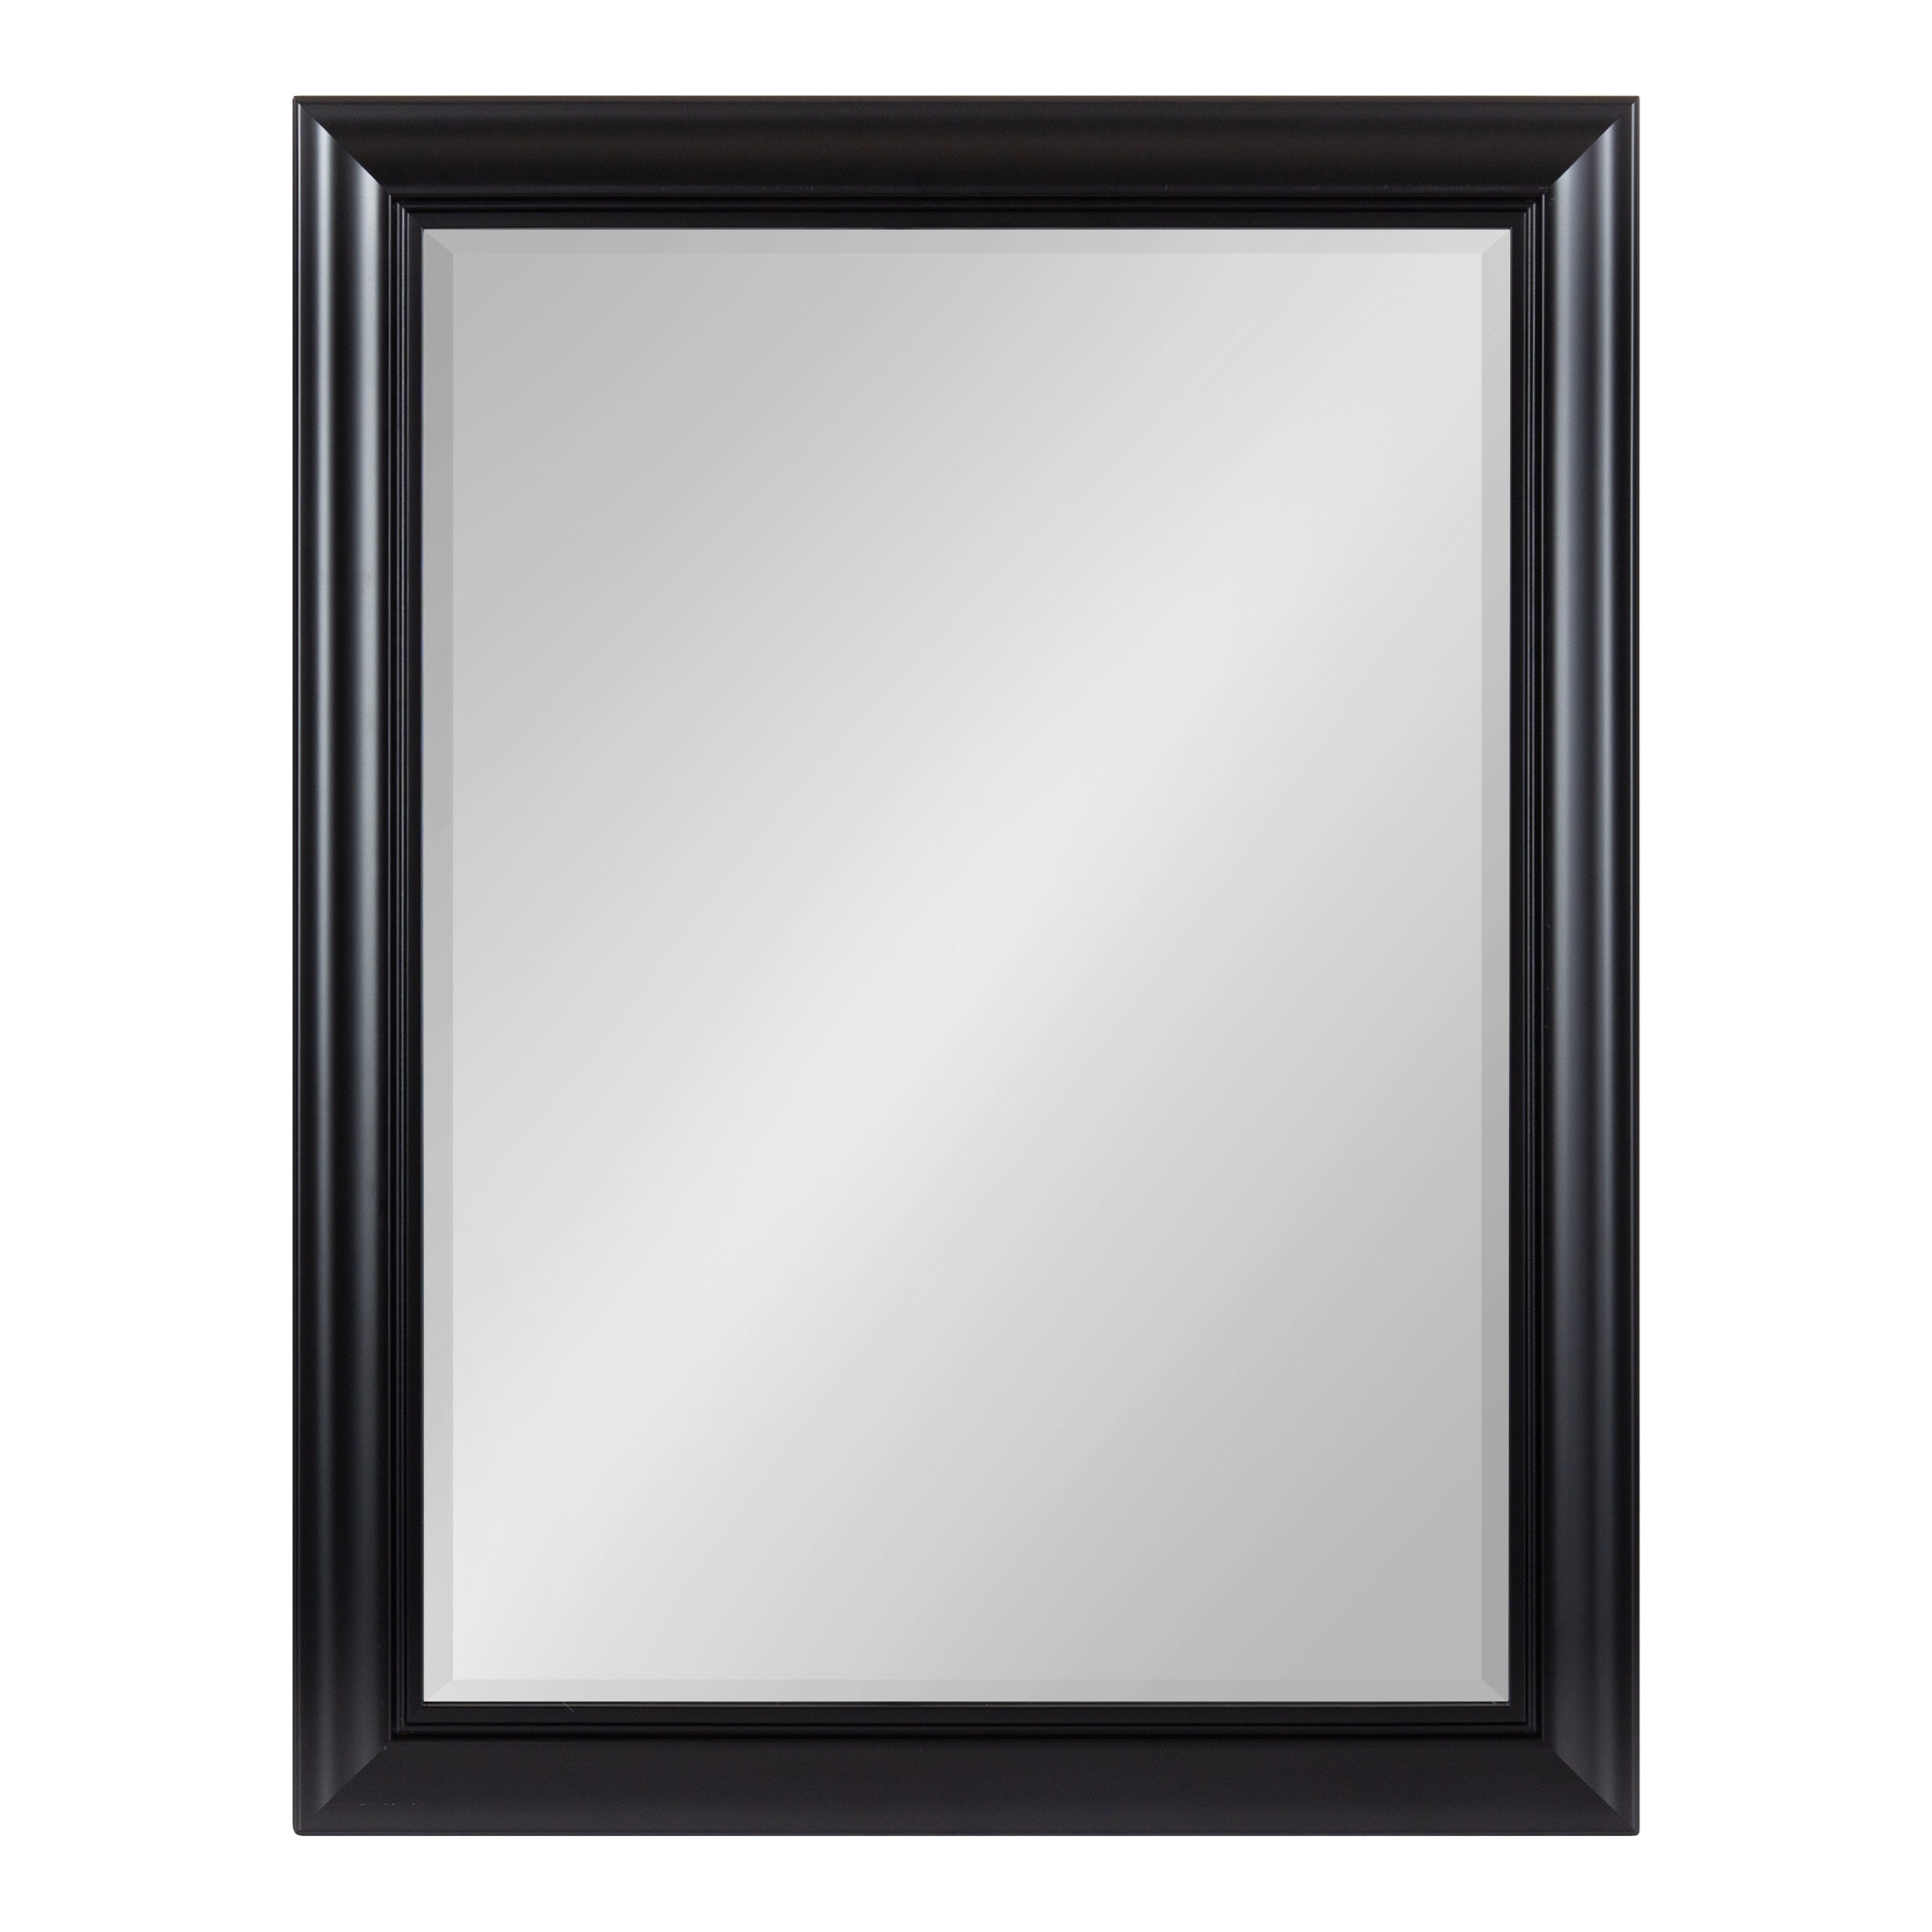 Dalat Framed Wall Mirror